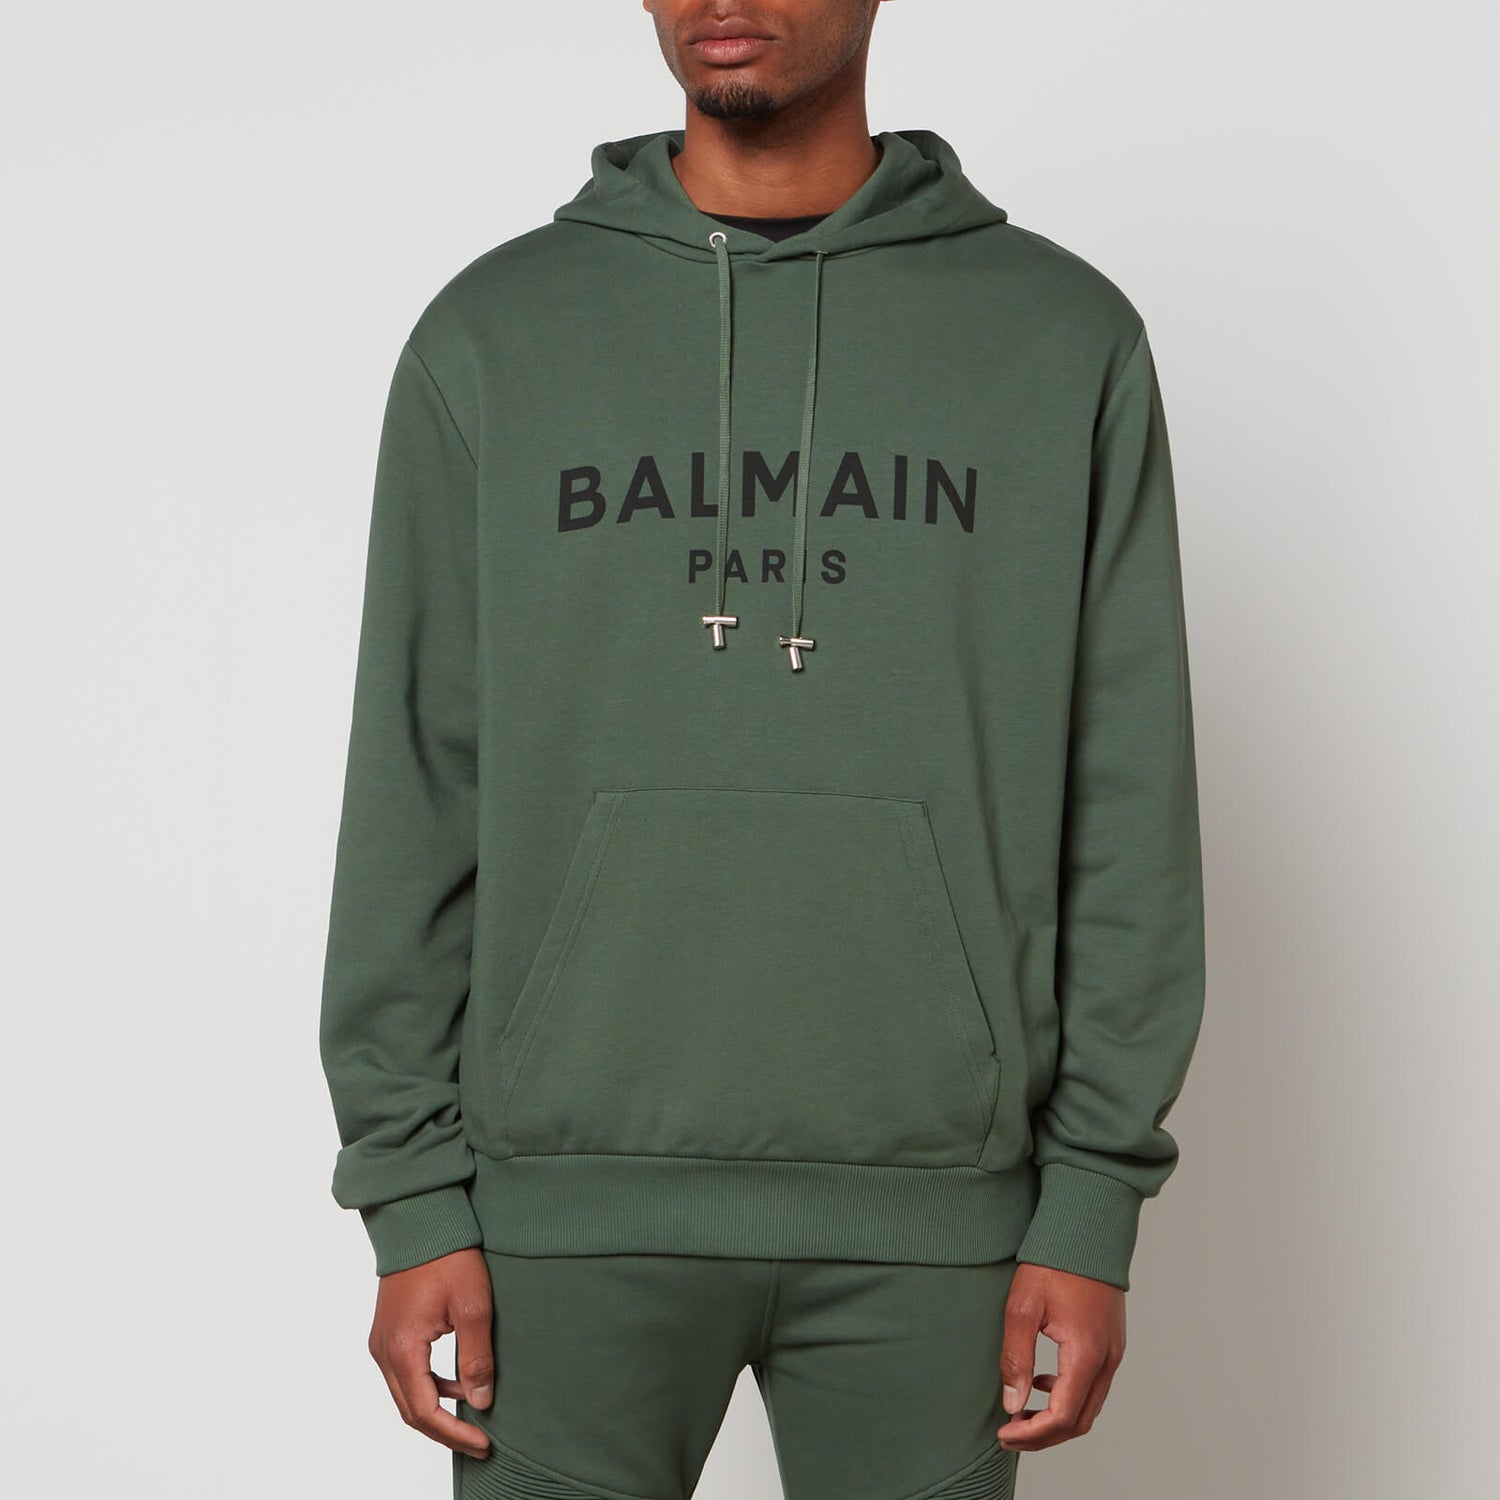 Balmain Men's Printed Hoodie - Green/Black - S